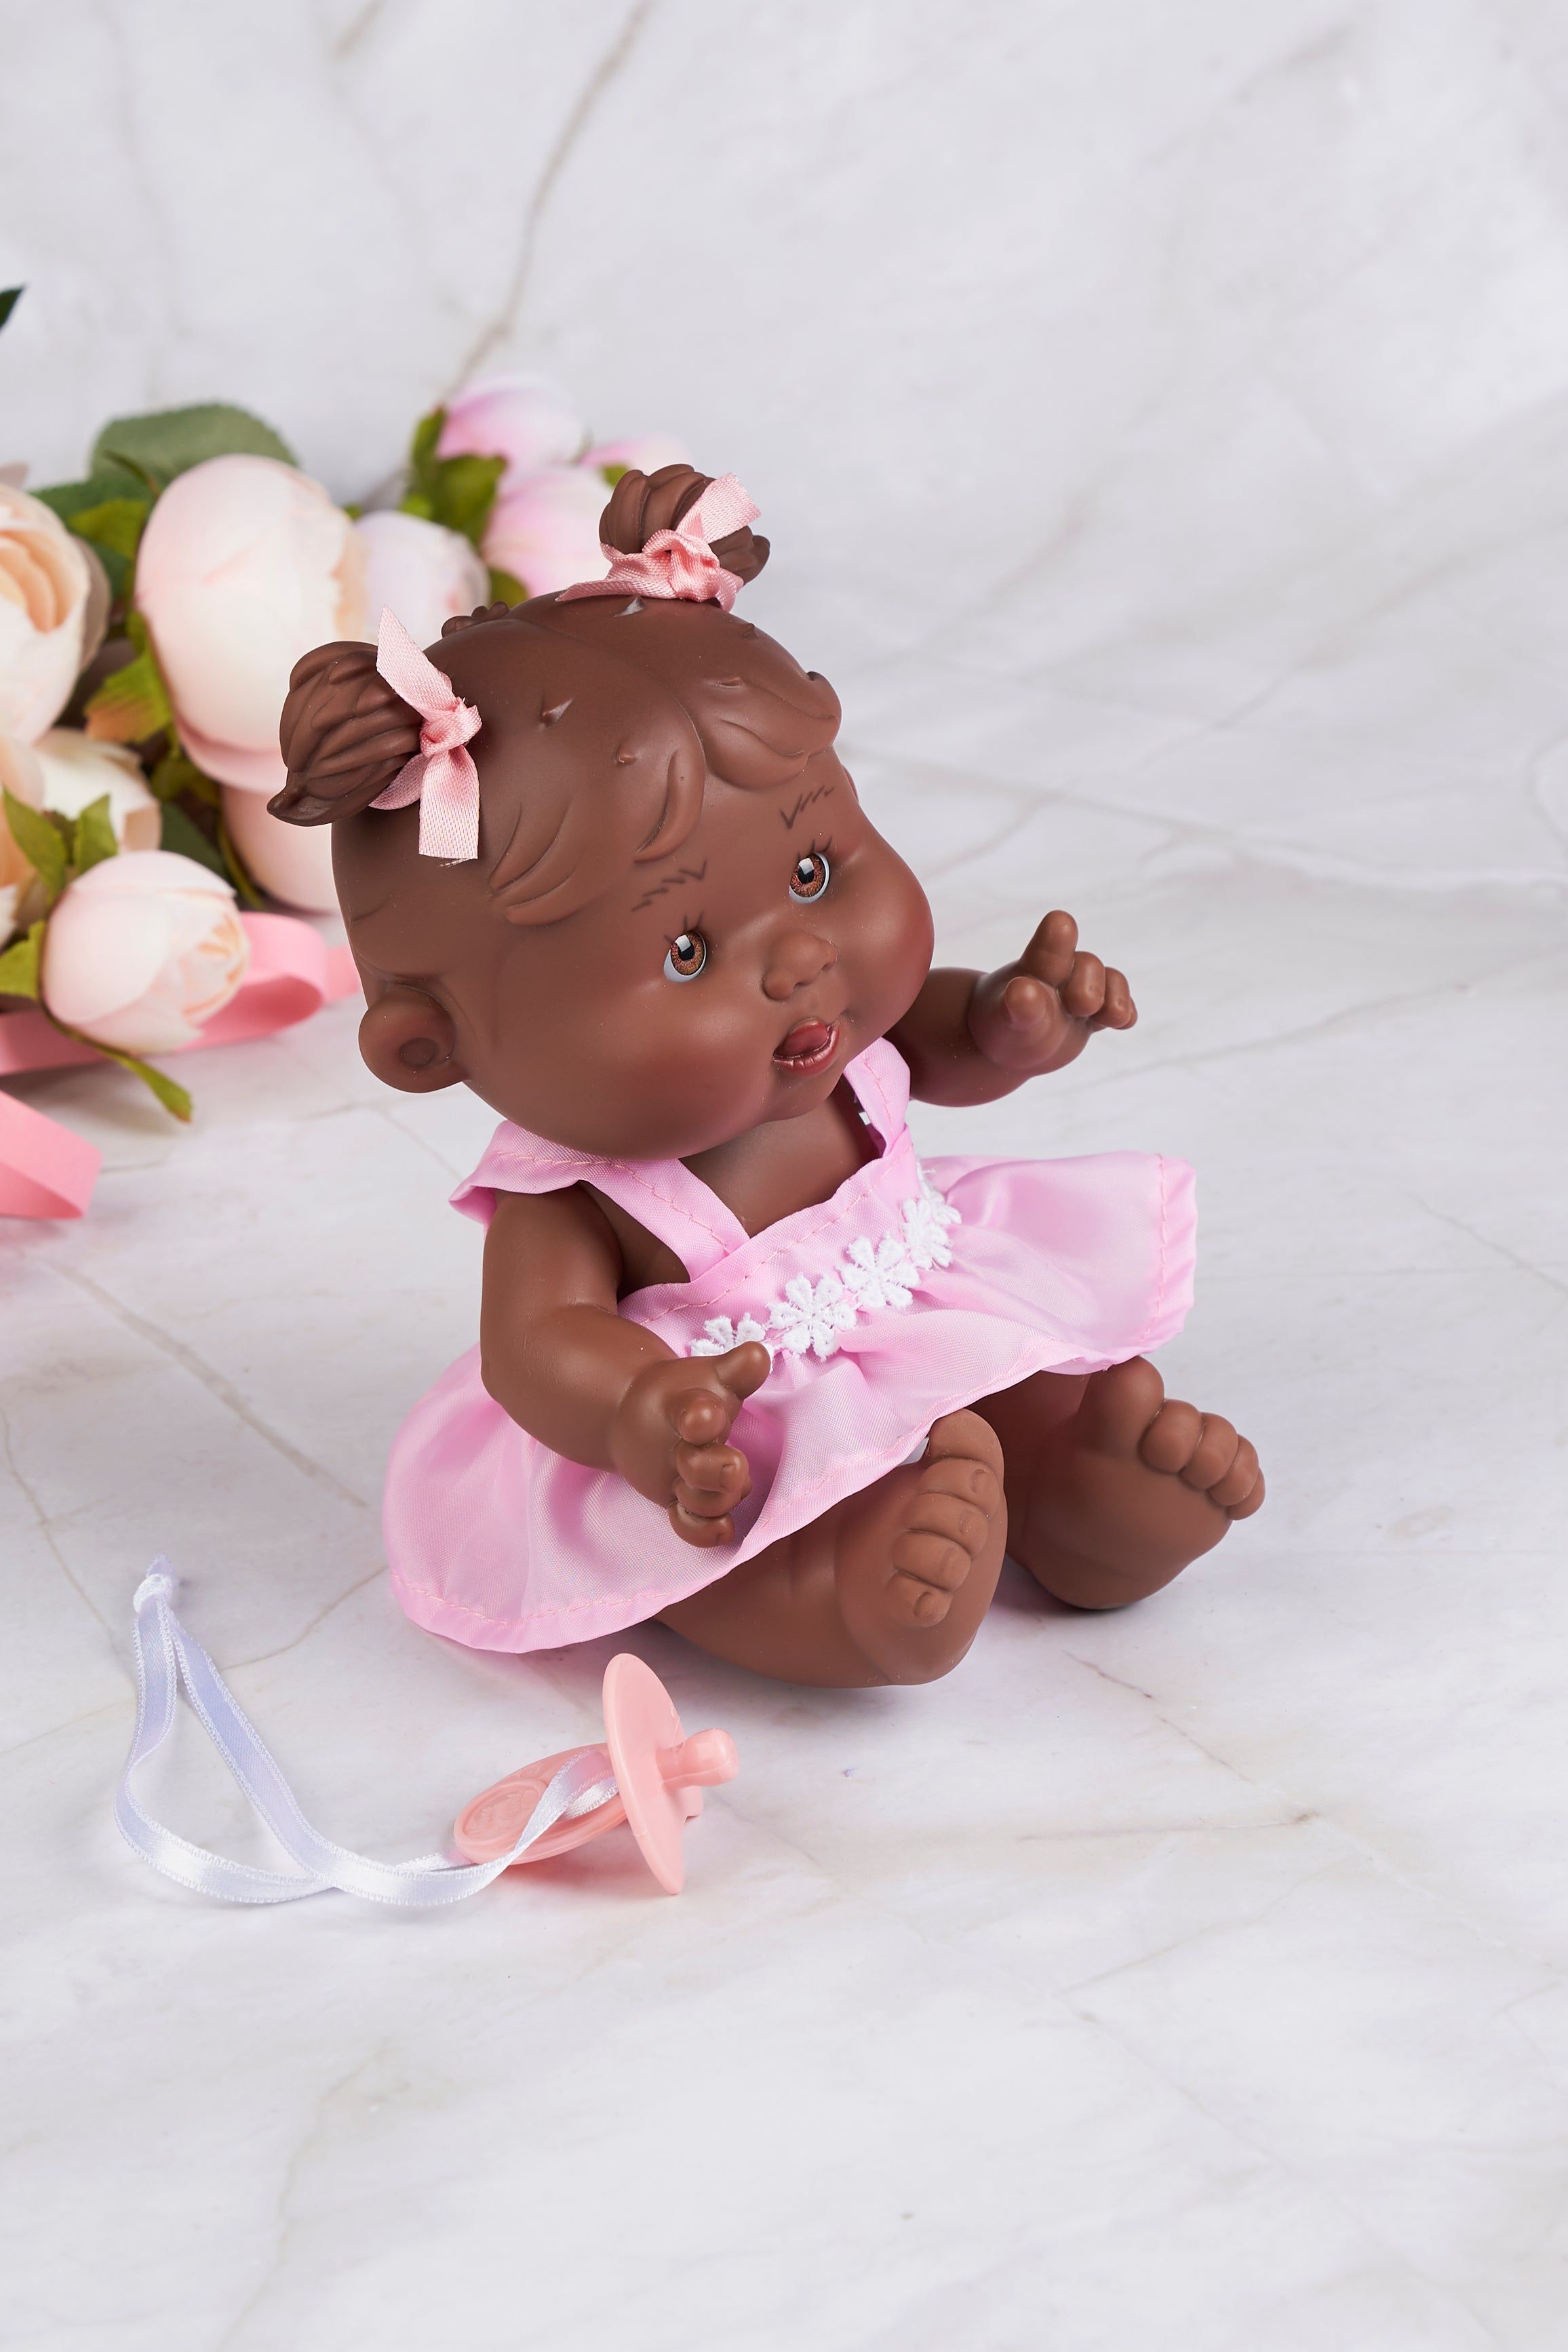 AnneBebe - Papusa Parfumata Pepotines Afro, cu Rochie Bretele roz Model Strengar, 21 cm 0494 Nines